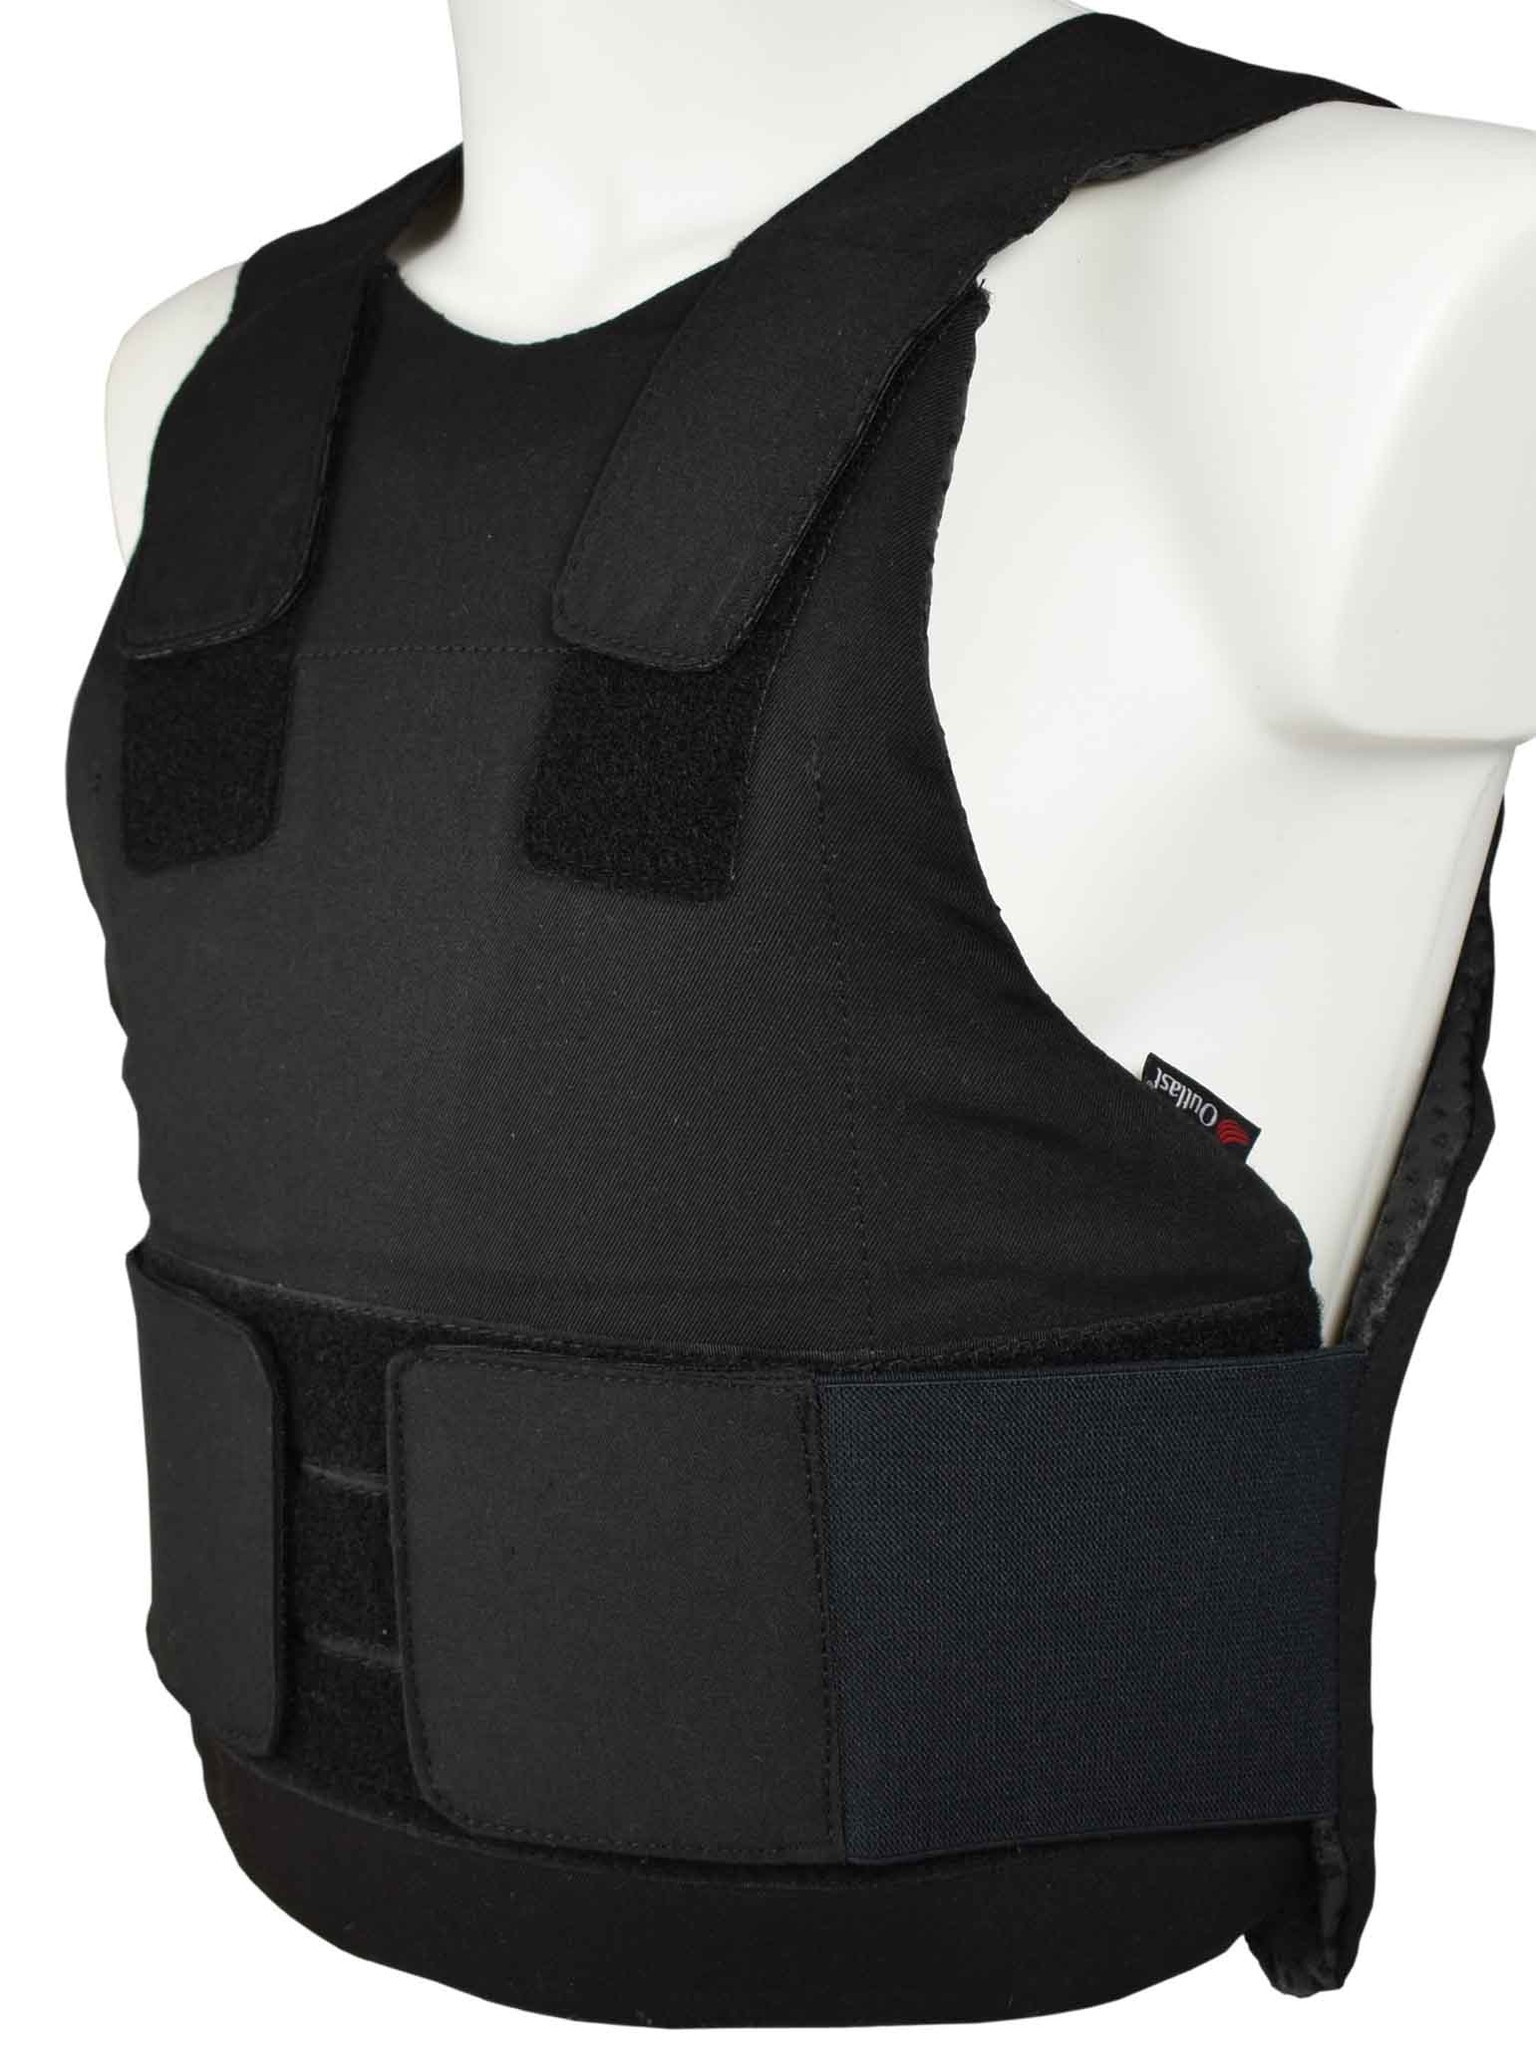 Bulletproof vest. Bulletproof Vest бронежилет. Бронежилет Bulletproof Vest 8 кг. Bulletproof Vest Bulletproof Vest. NIJ 0101 06 бронежилет.